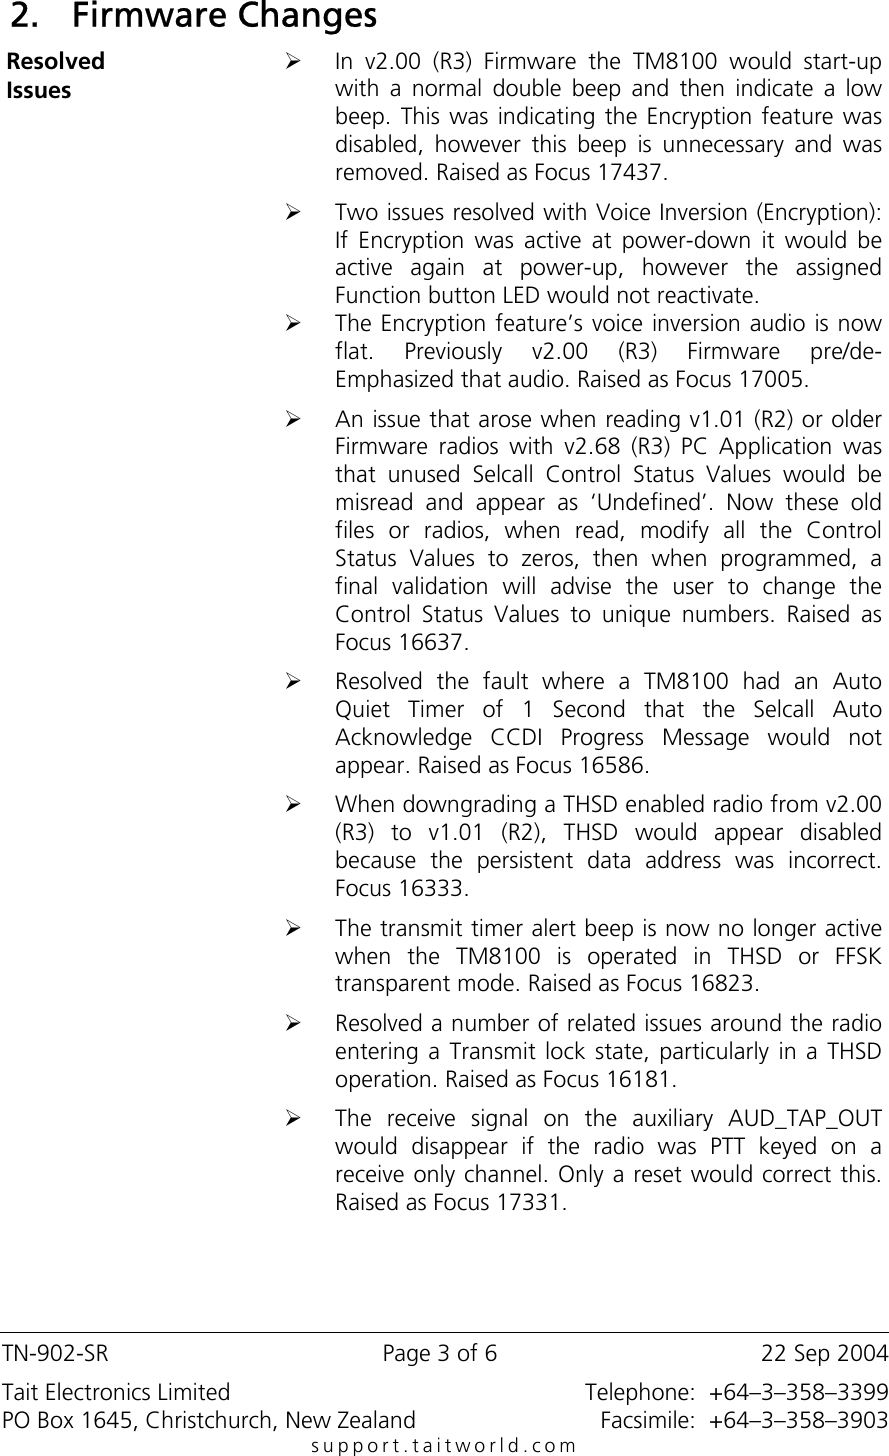 Page 3 of 6 - TN-902-SR TECHNOTE/TN-902-SR - TM8100 Mobile Radio Firmware V2.02 Upgrade Instructions